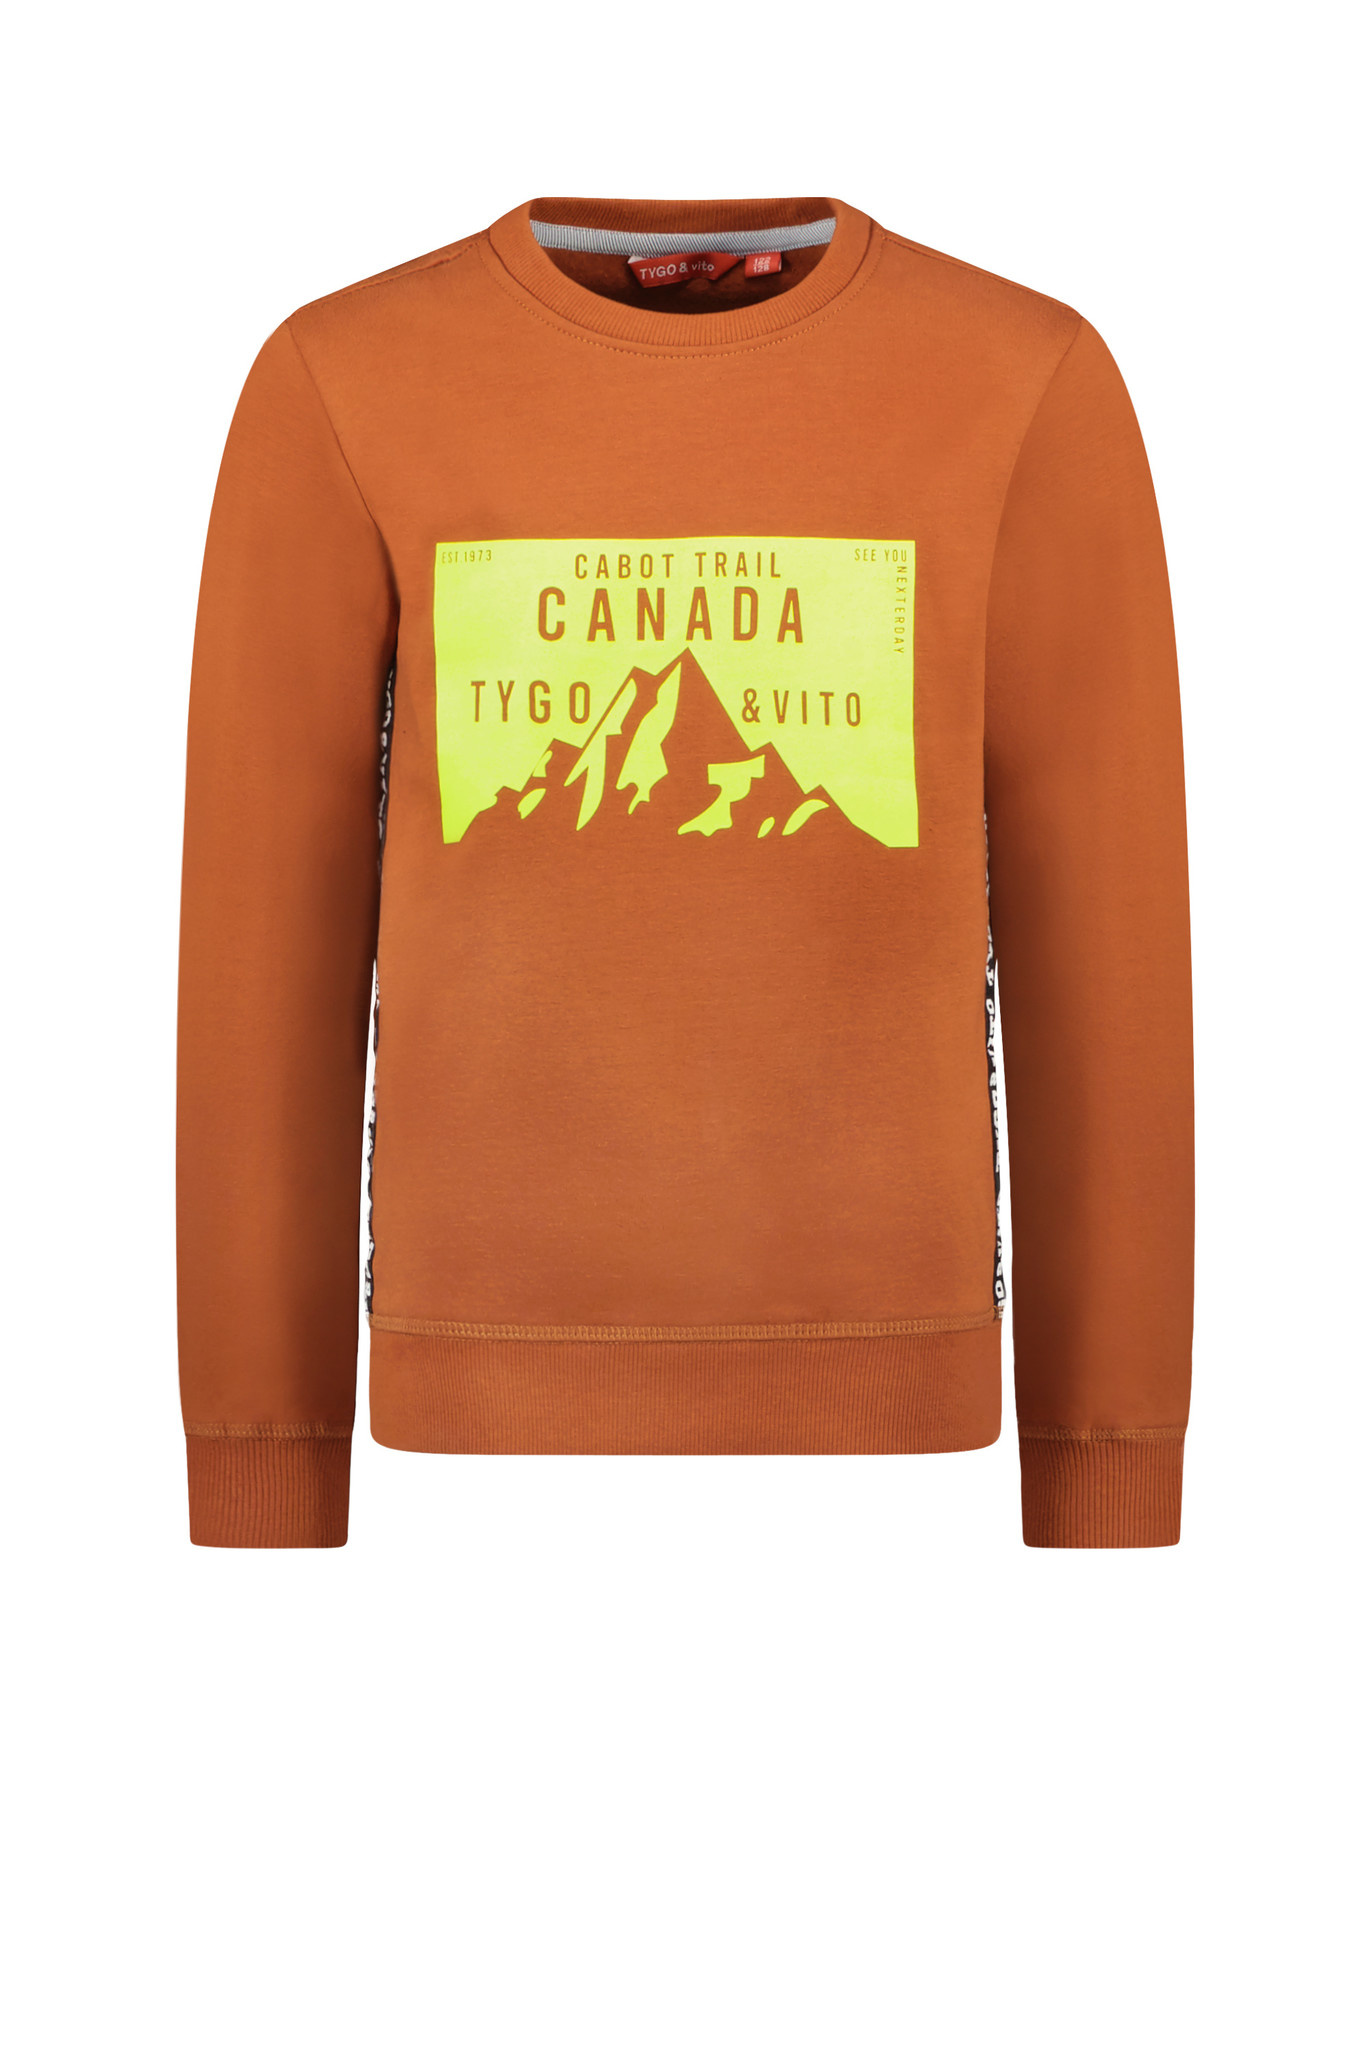 Acht Nautisch Productie Tygo & Vito Jongens sweater Canada - Walnut - merkmeisjeskleding.nl